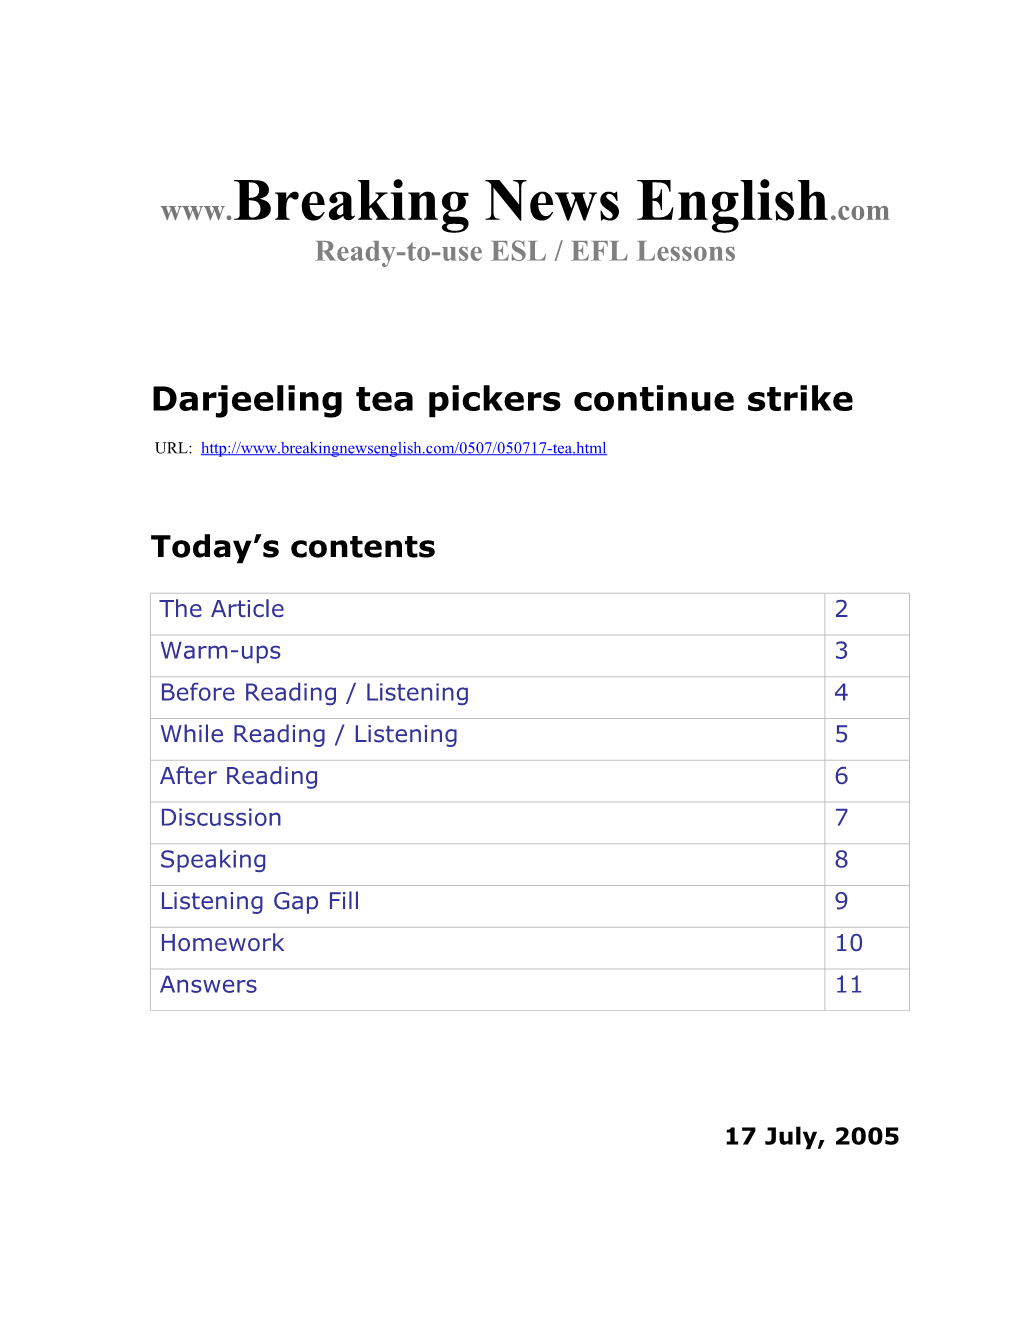 Darjeeling Tea Pickers Continue Strike